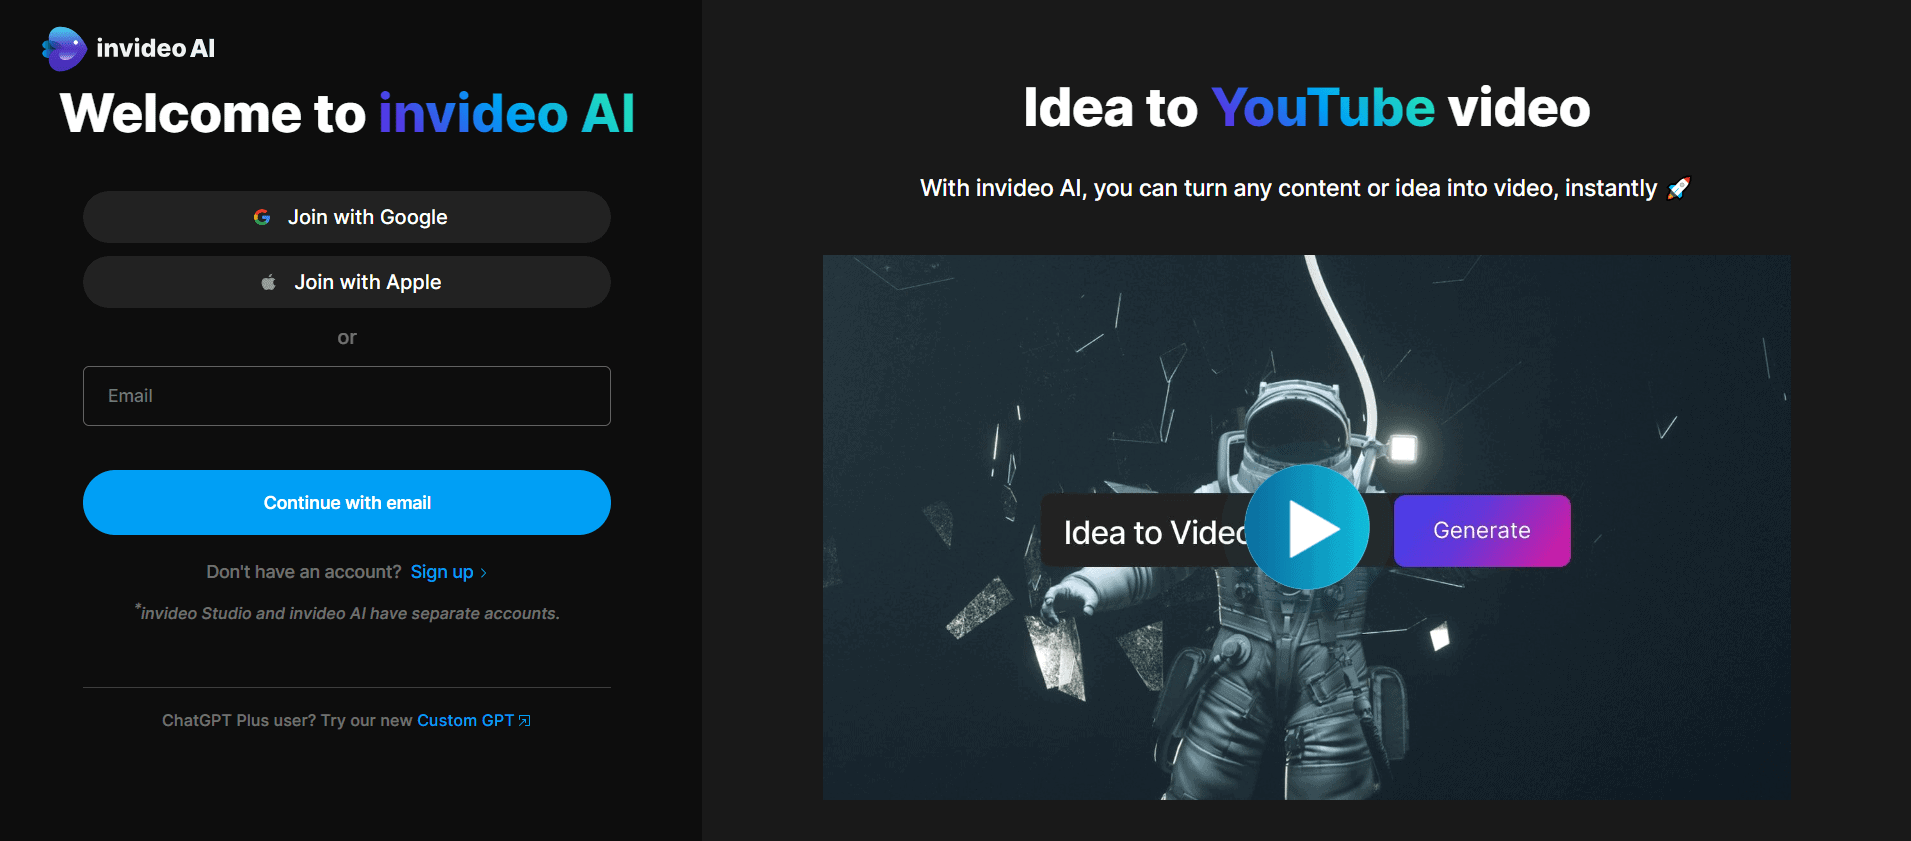 InvideoAI homepage